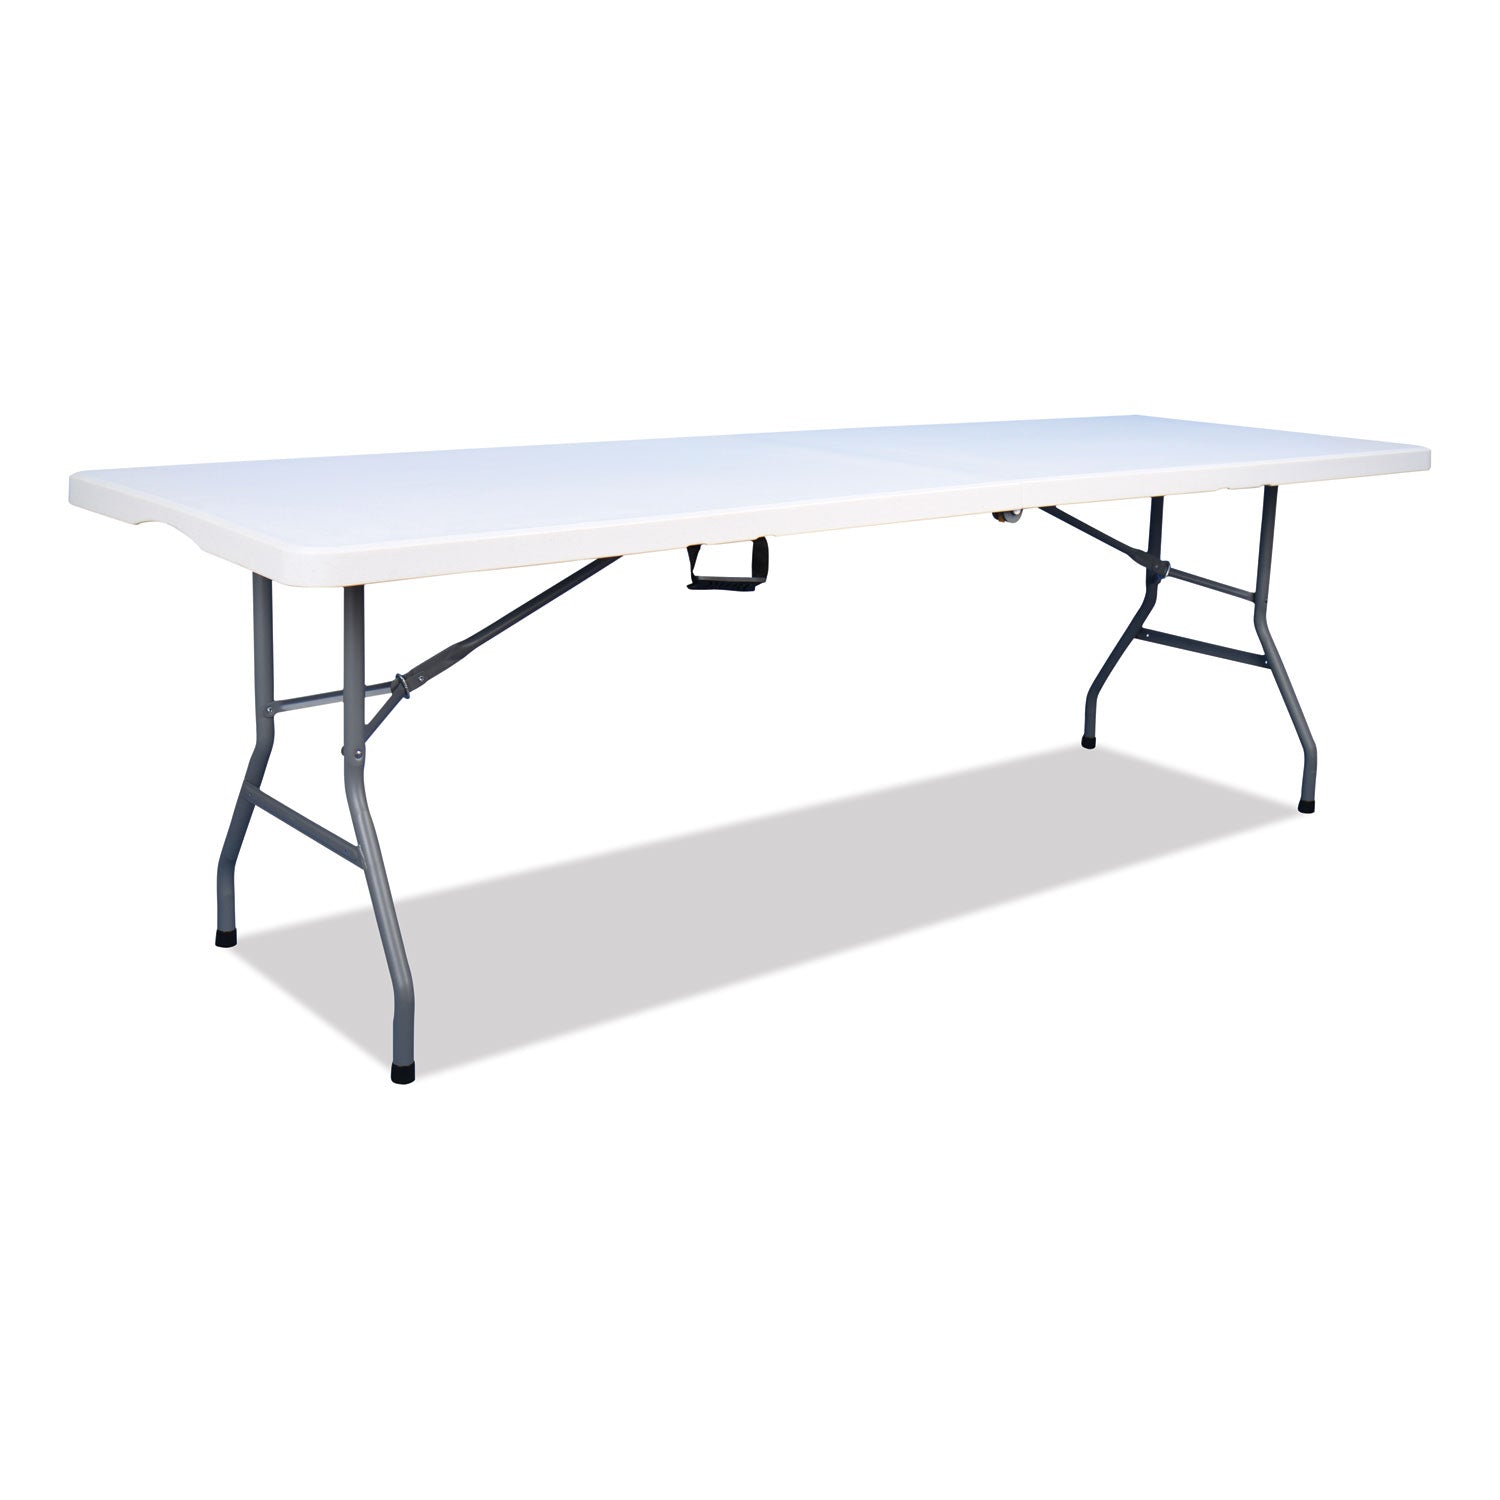 bifold-resin-folding-table-rectangular-945-x-299-x-30-white-granite-top-gray-base-legs-2-pack_ice61273 - 4